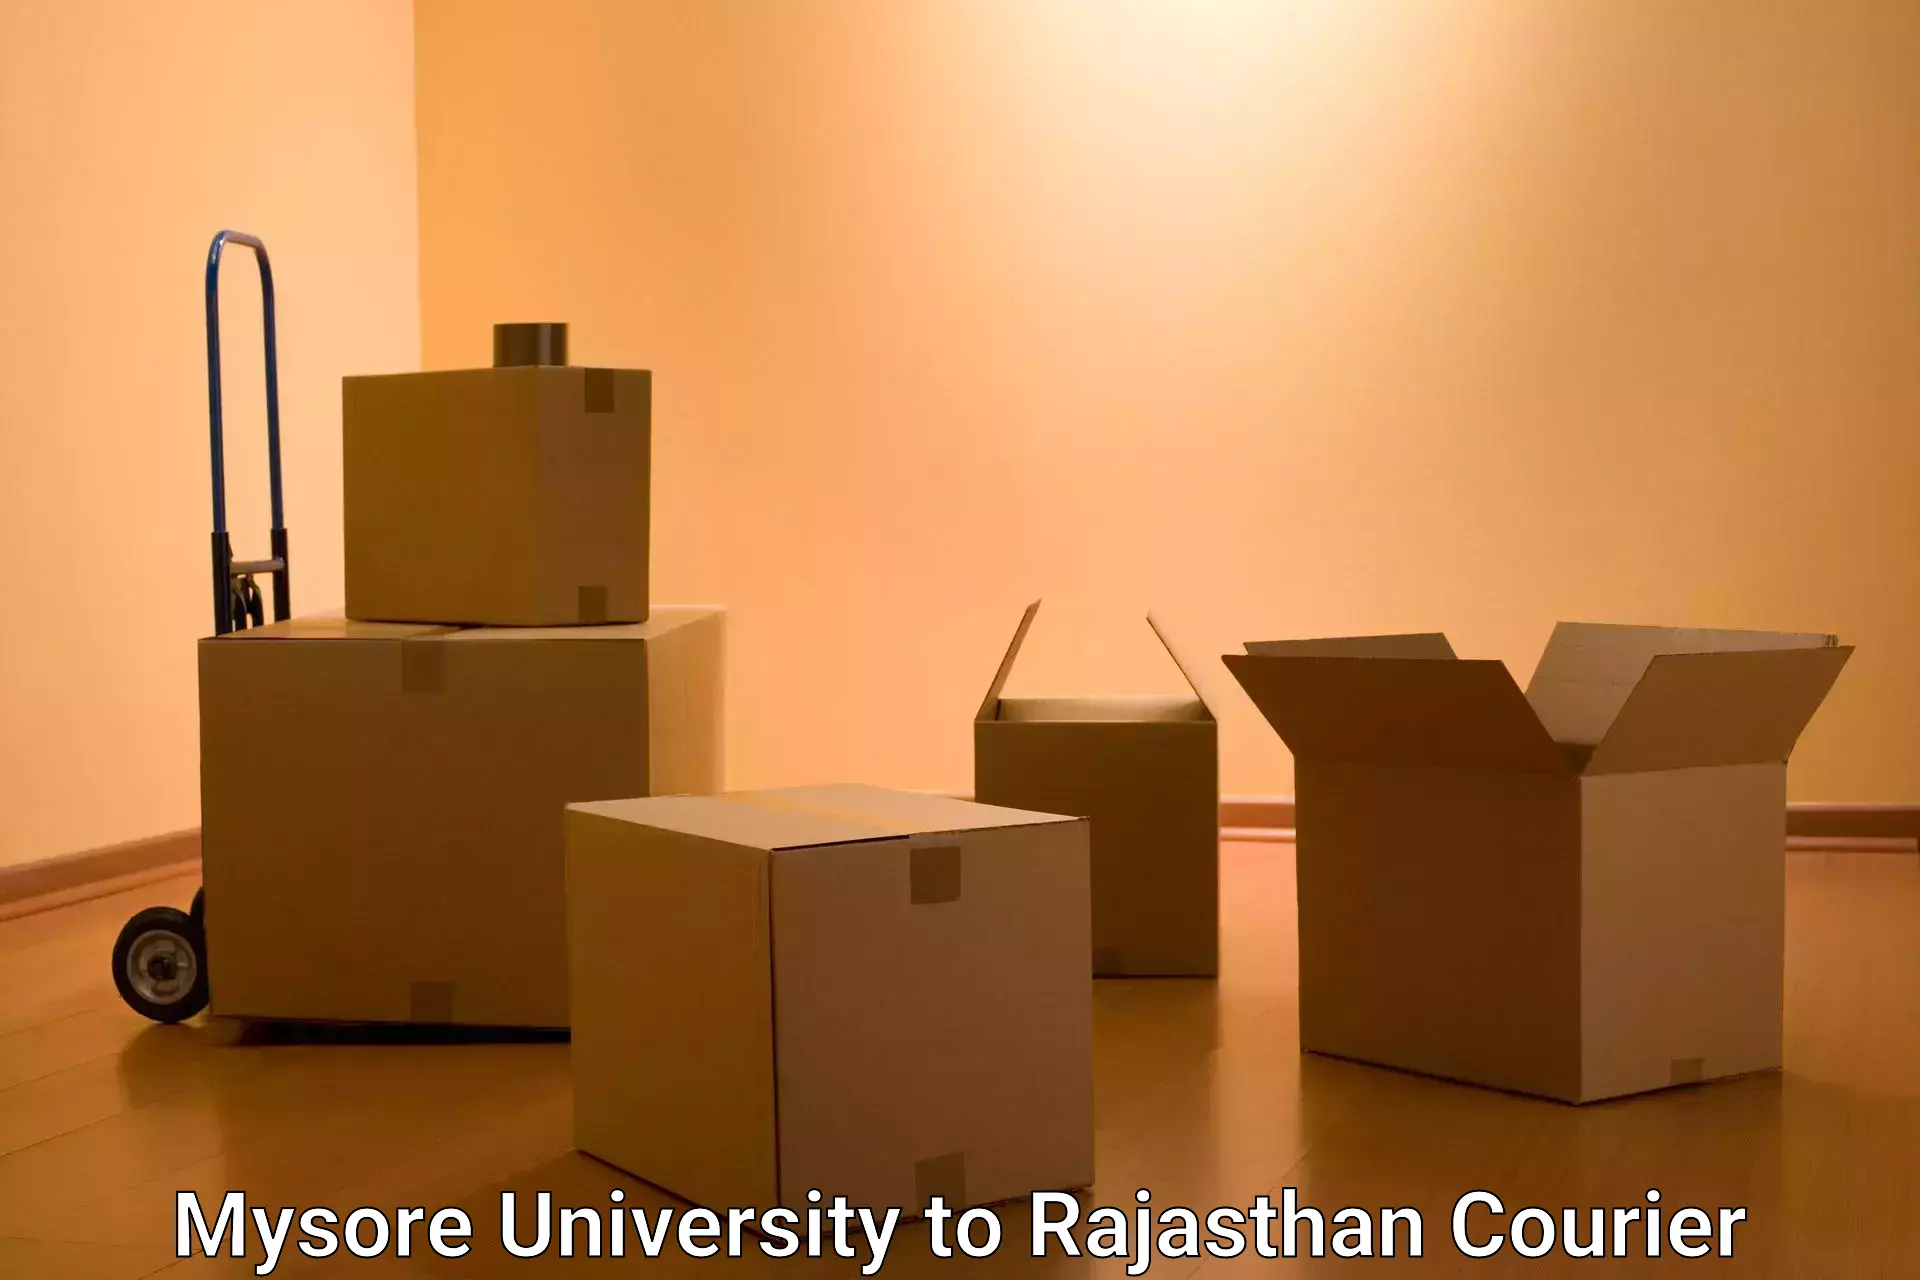 Individual parcel service Mysore University to Rajasthan